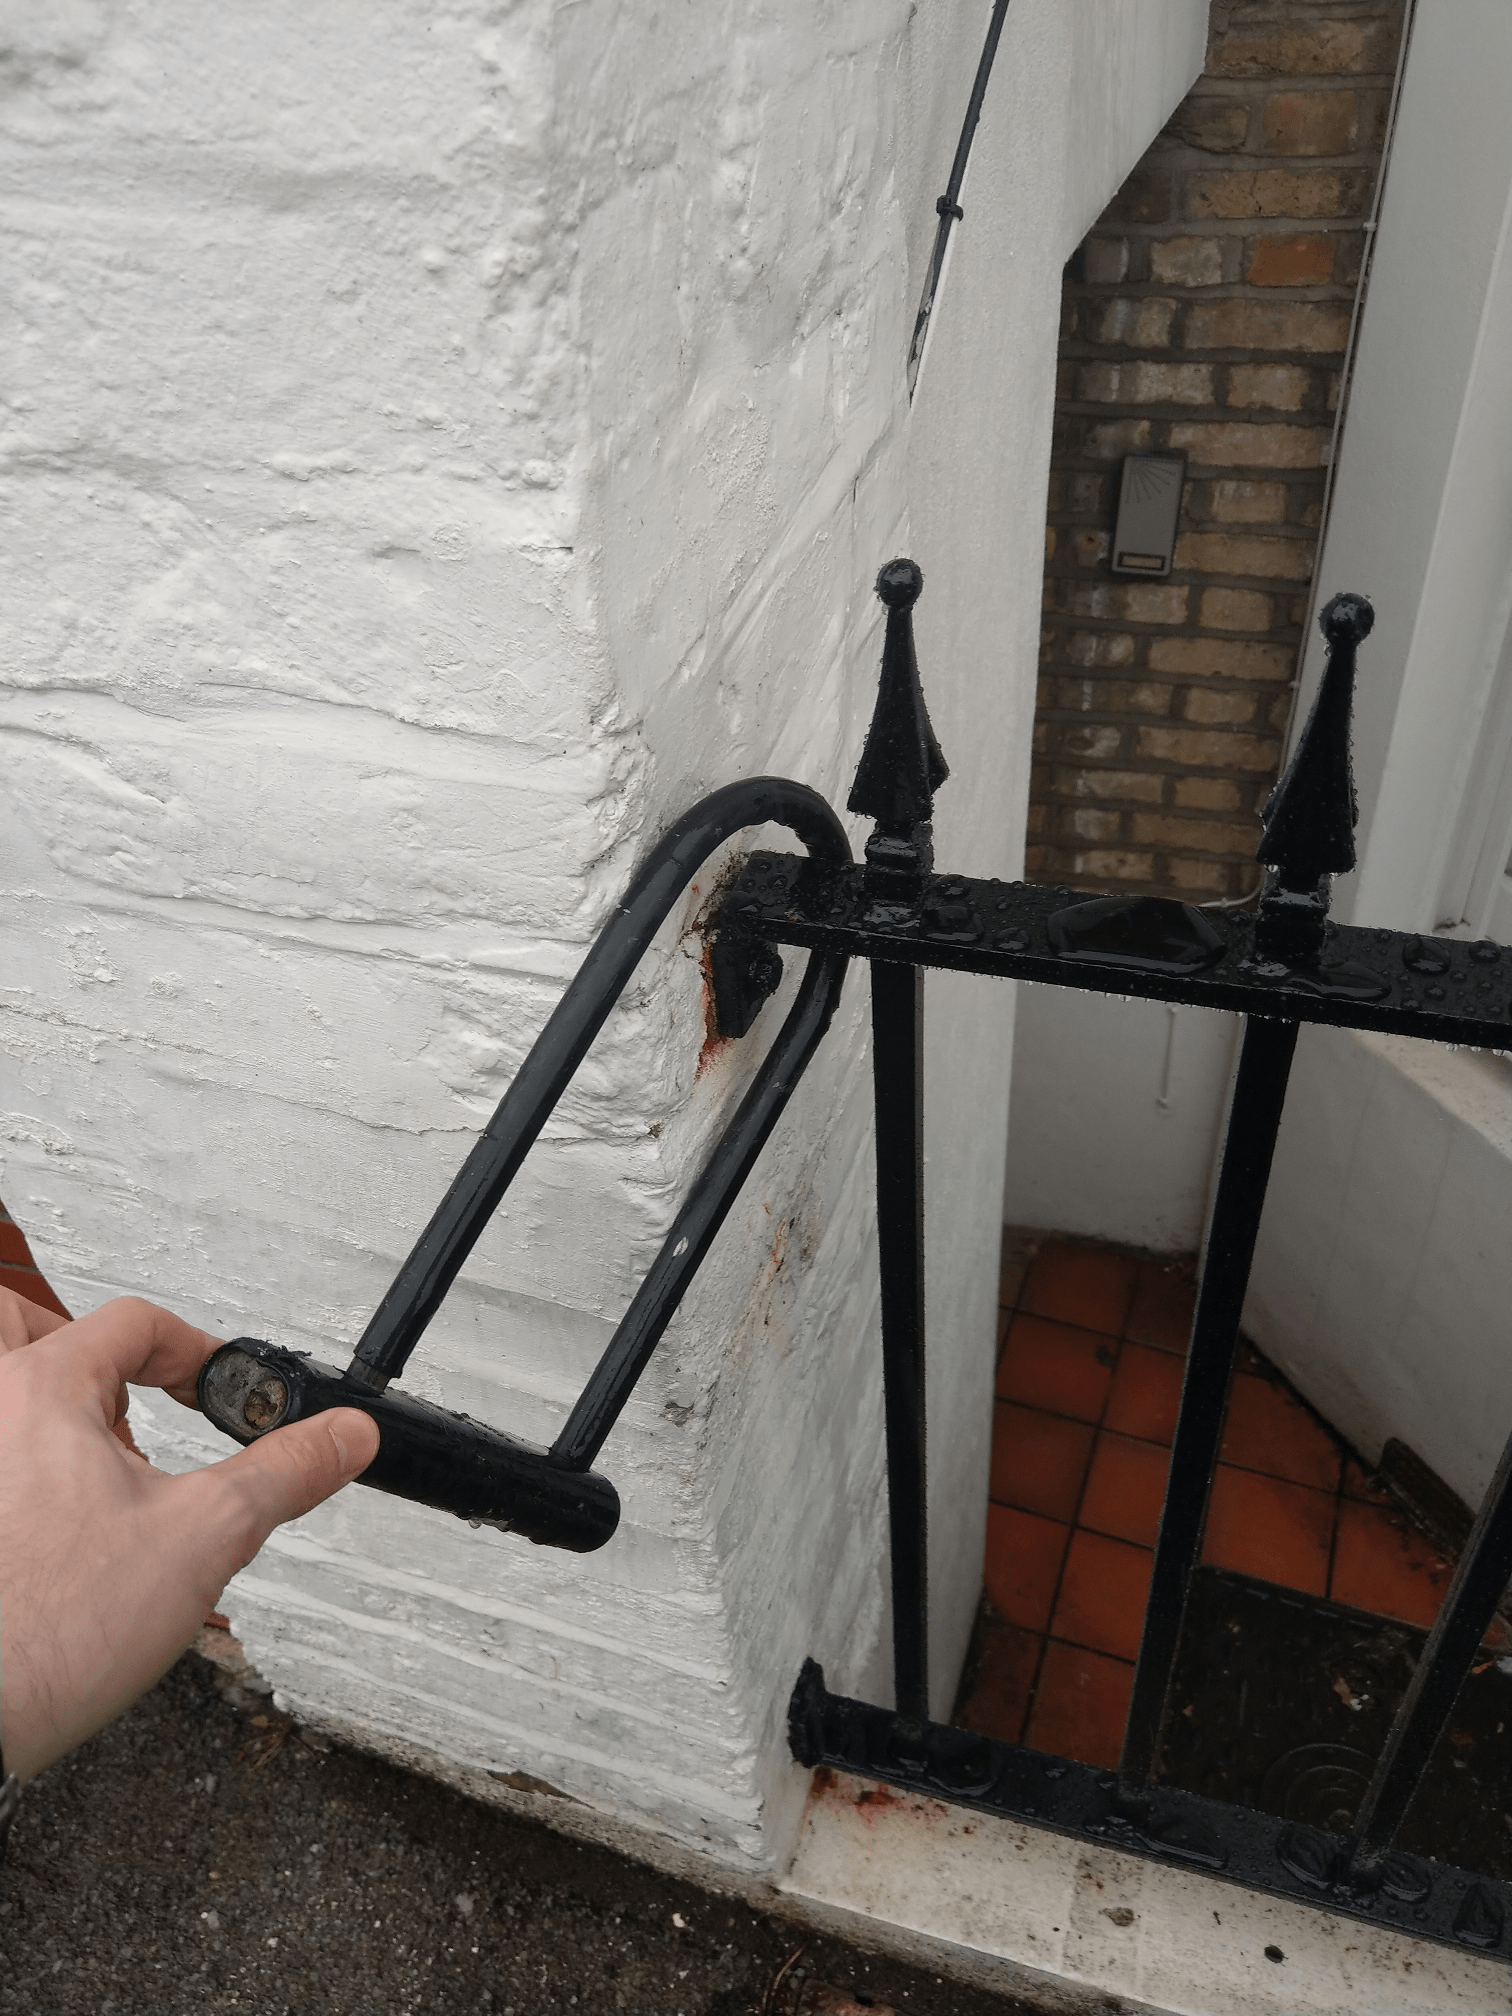 Jammed bike lock on railings